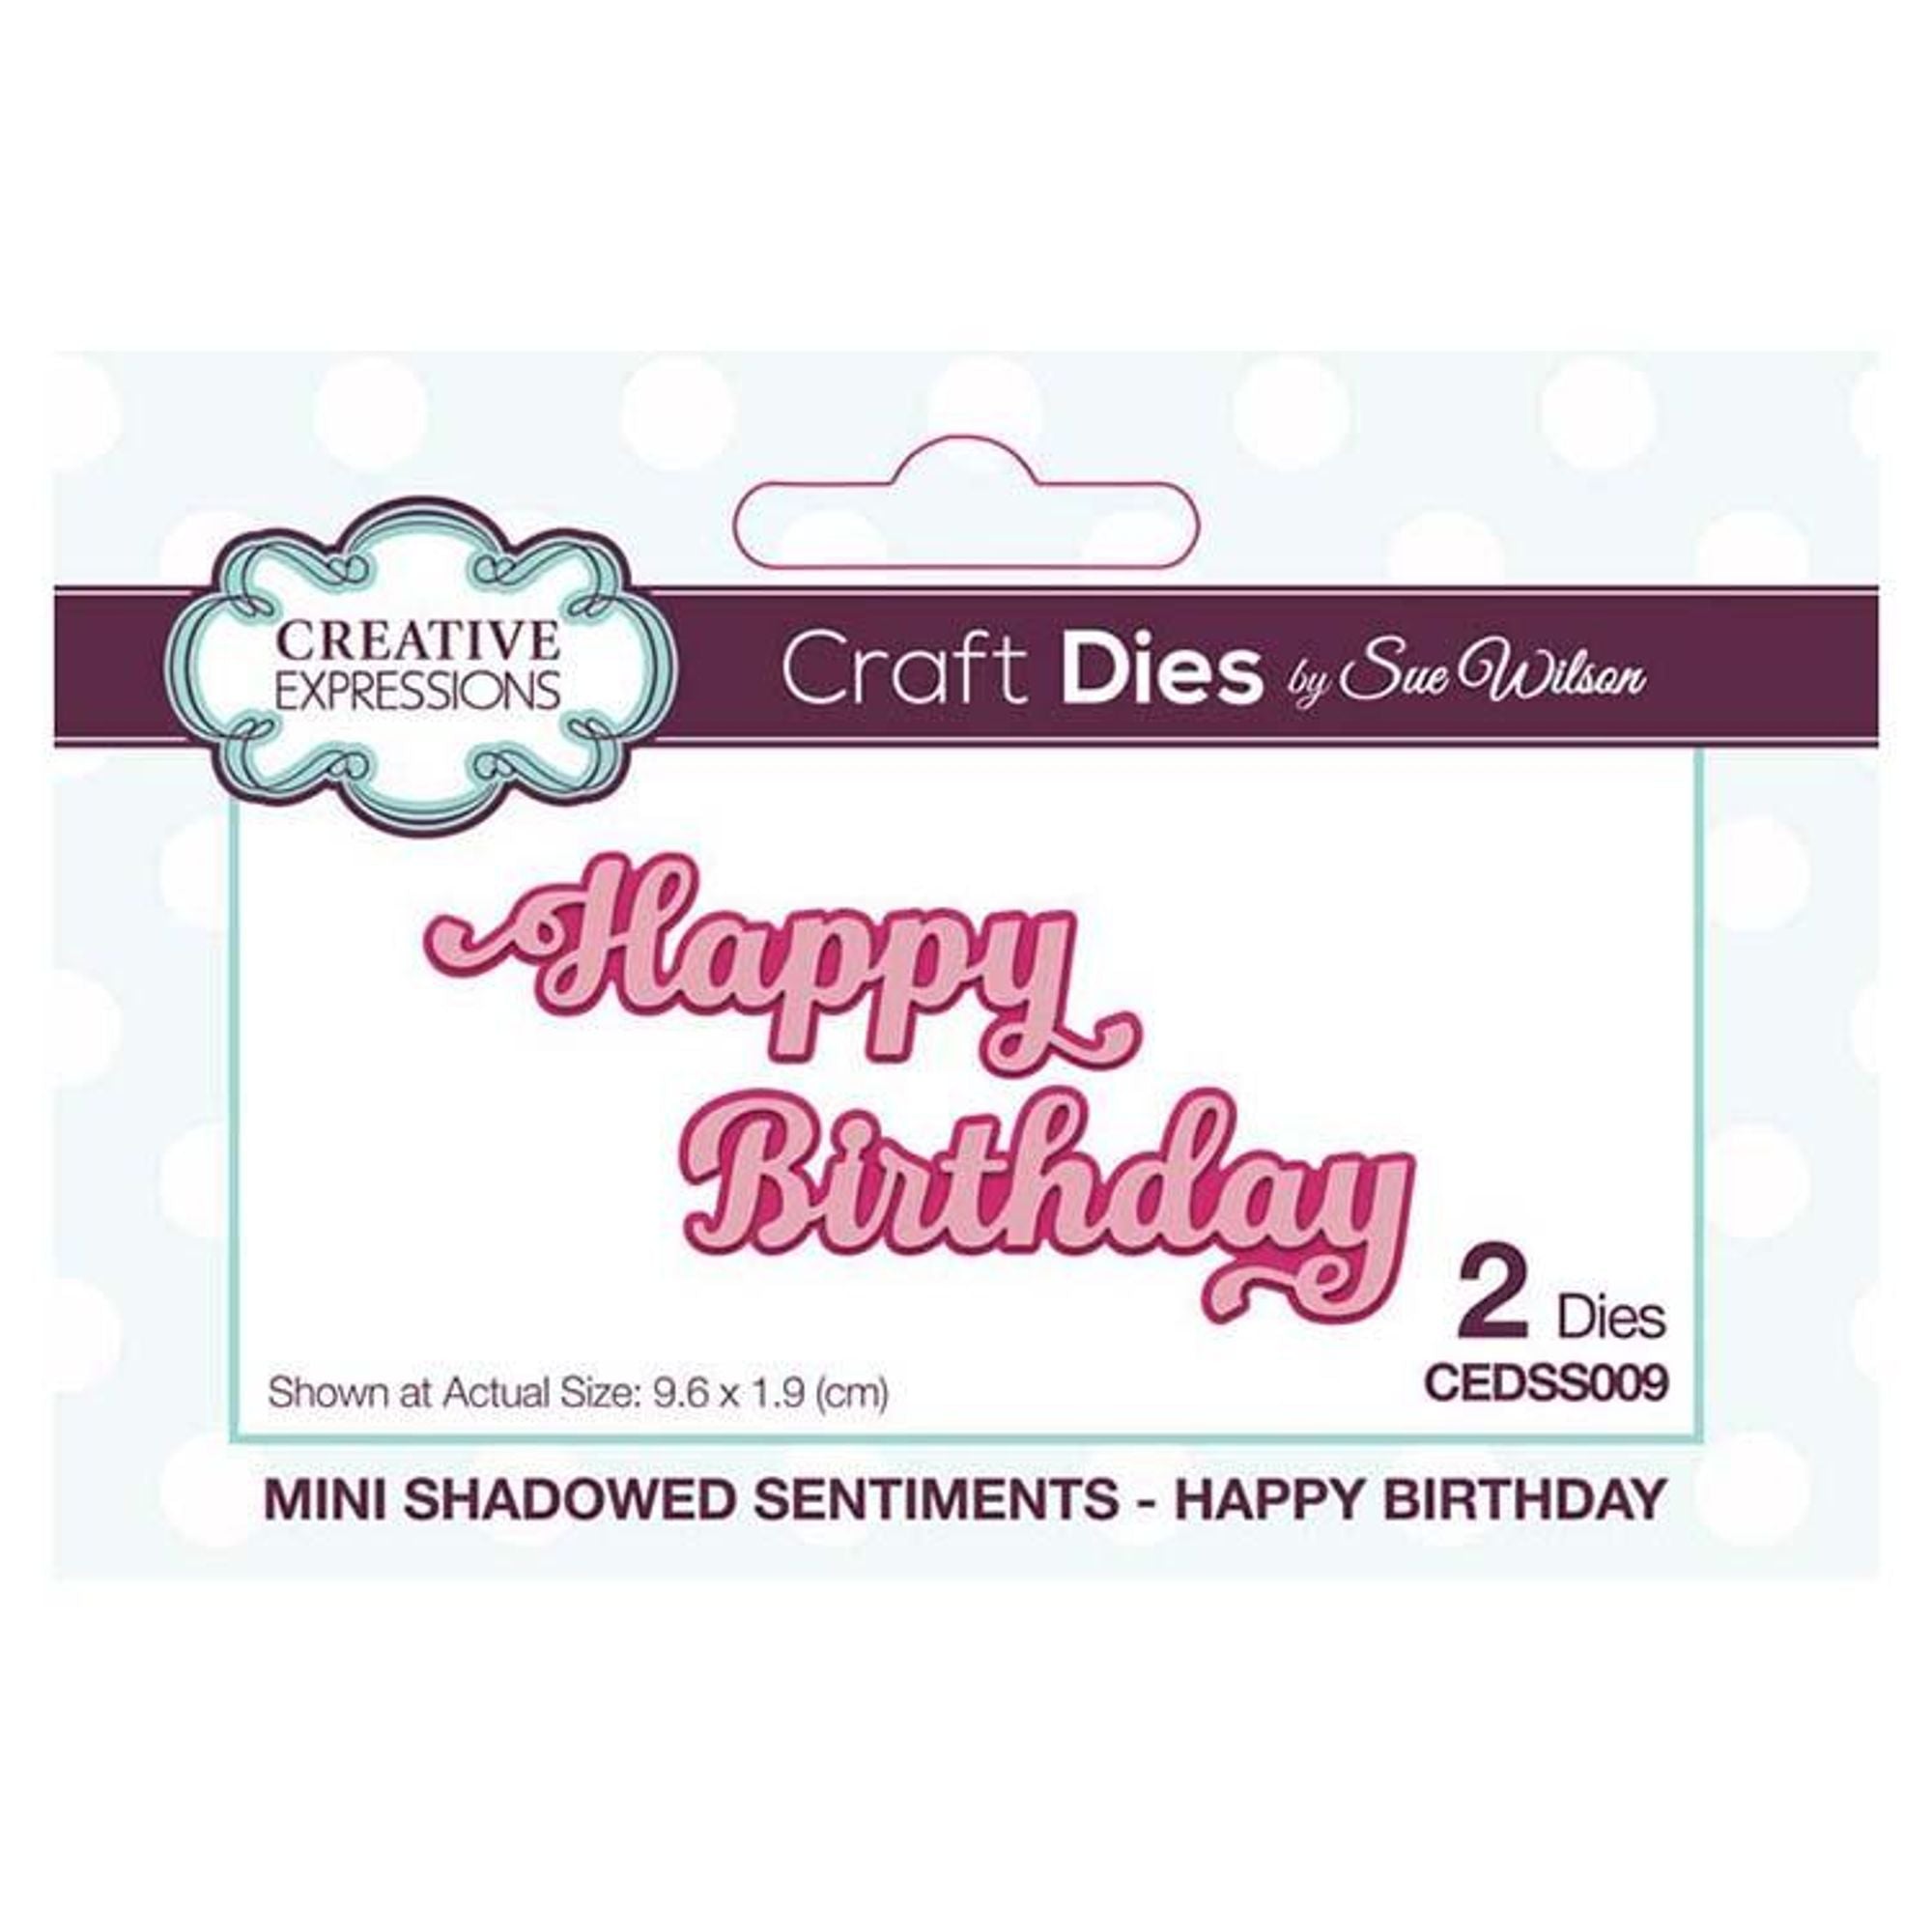 Creative Expressions Dies by Sue Wilson Mini Shadowed Sentiments Happy Birthday